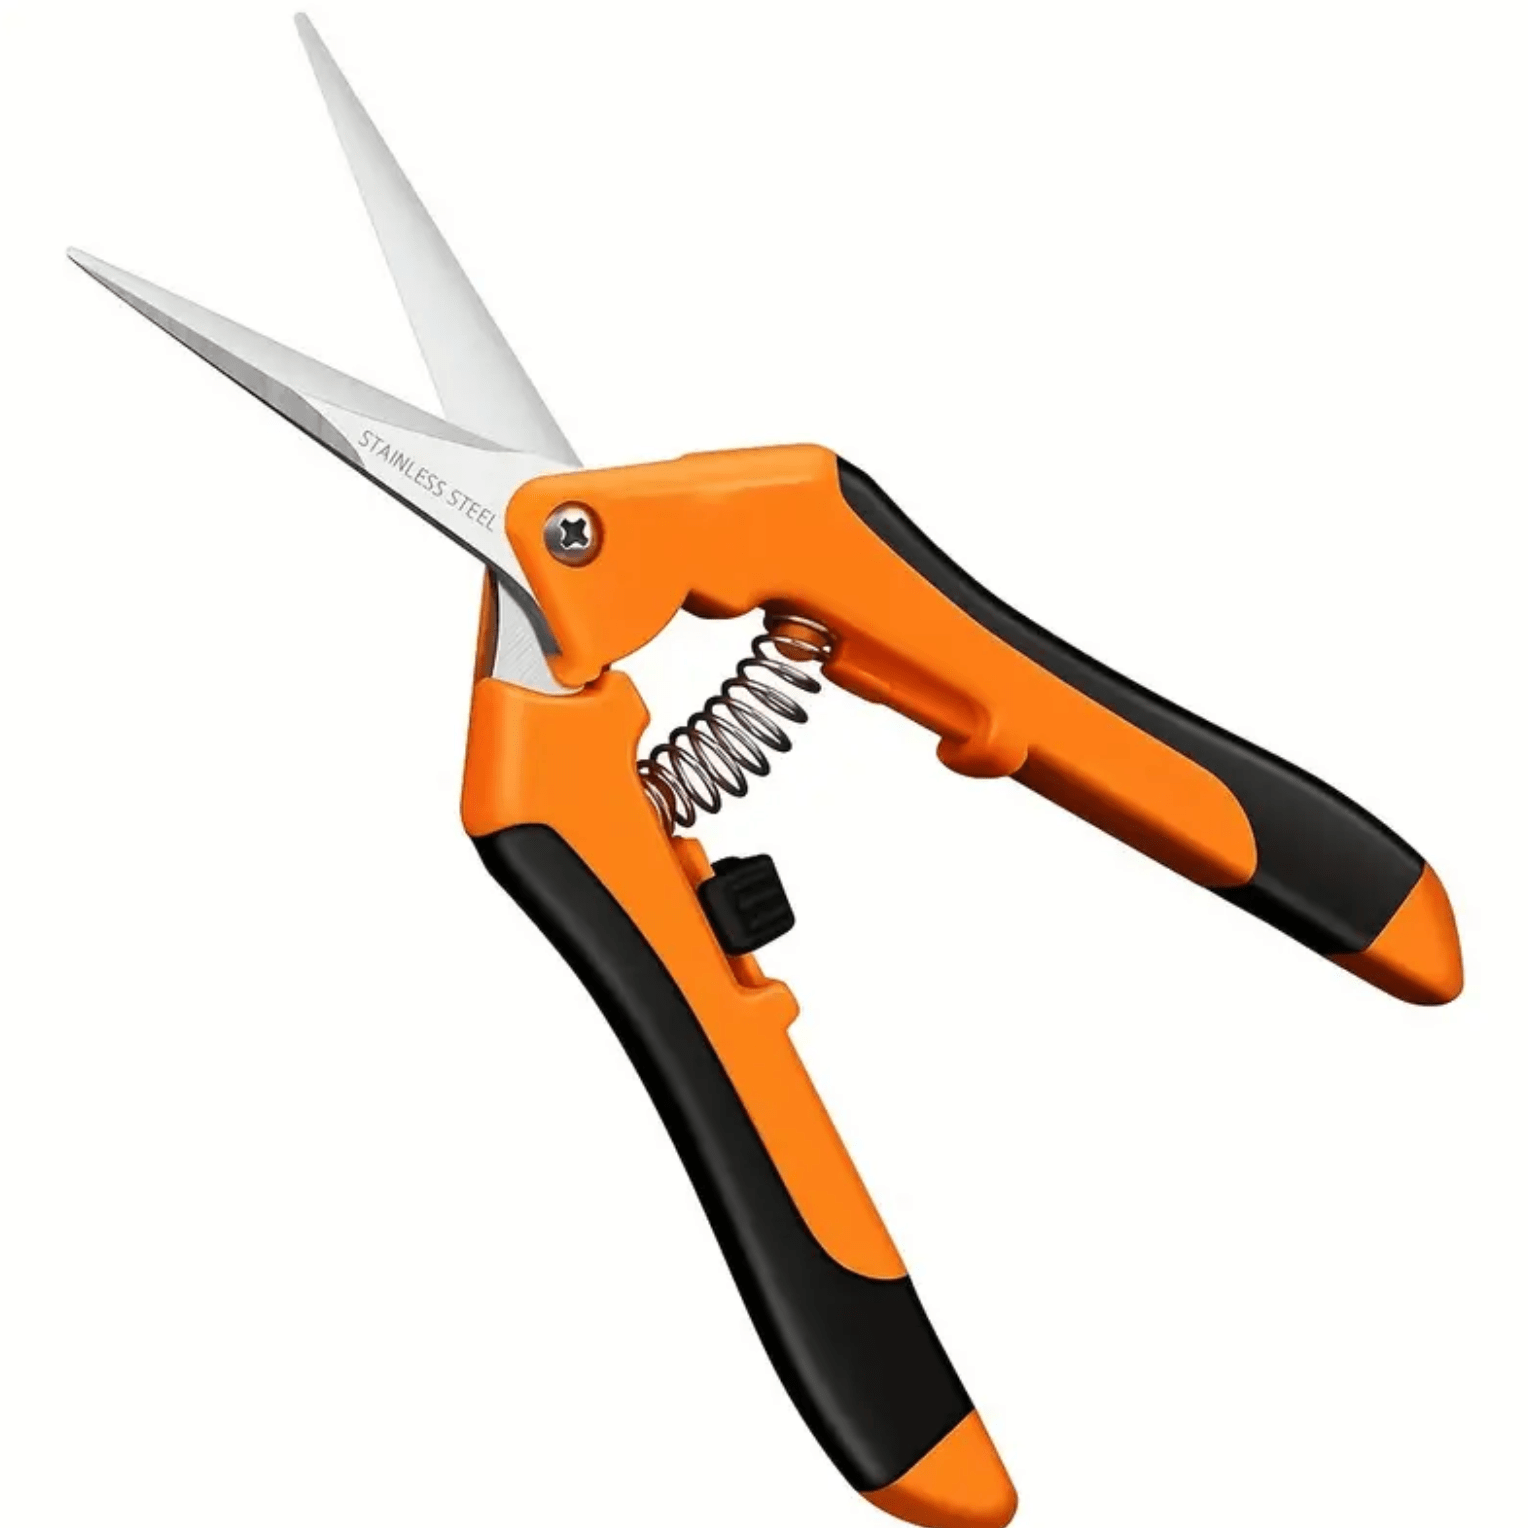 Orange and Black Scissors 2.5" x 6.5" Stainless Steel Precision Scissors with ORANGE or GREEN Comfortable Handle, Beading Scissors, Basics Basics